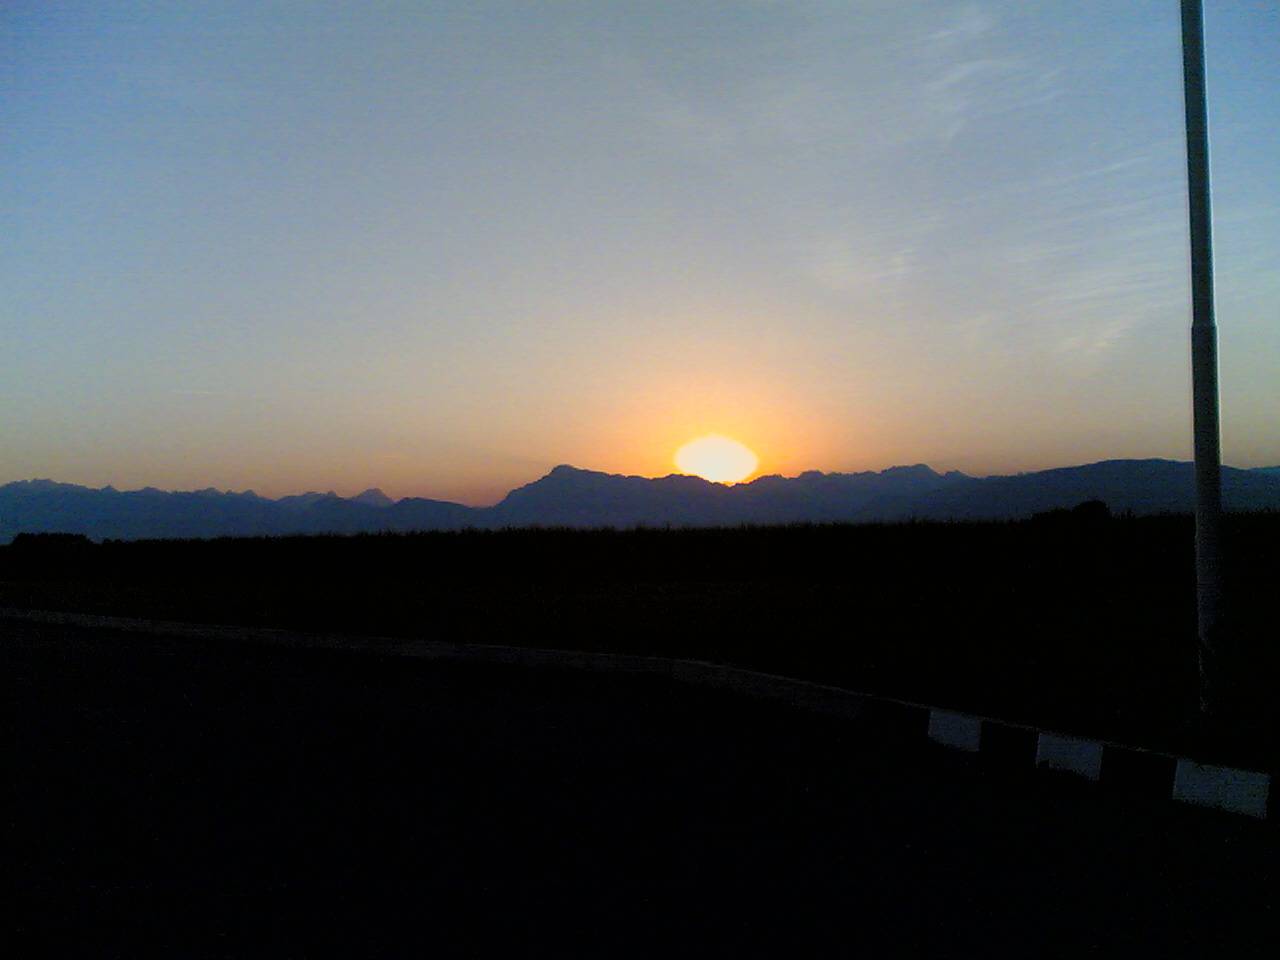 Sunset over Alpi: 47 KB